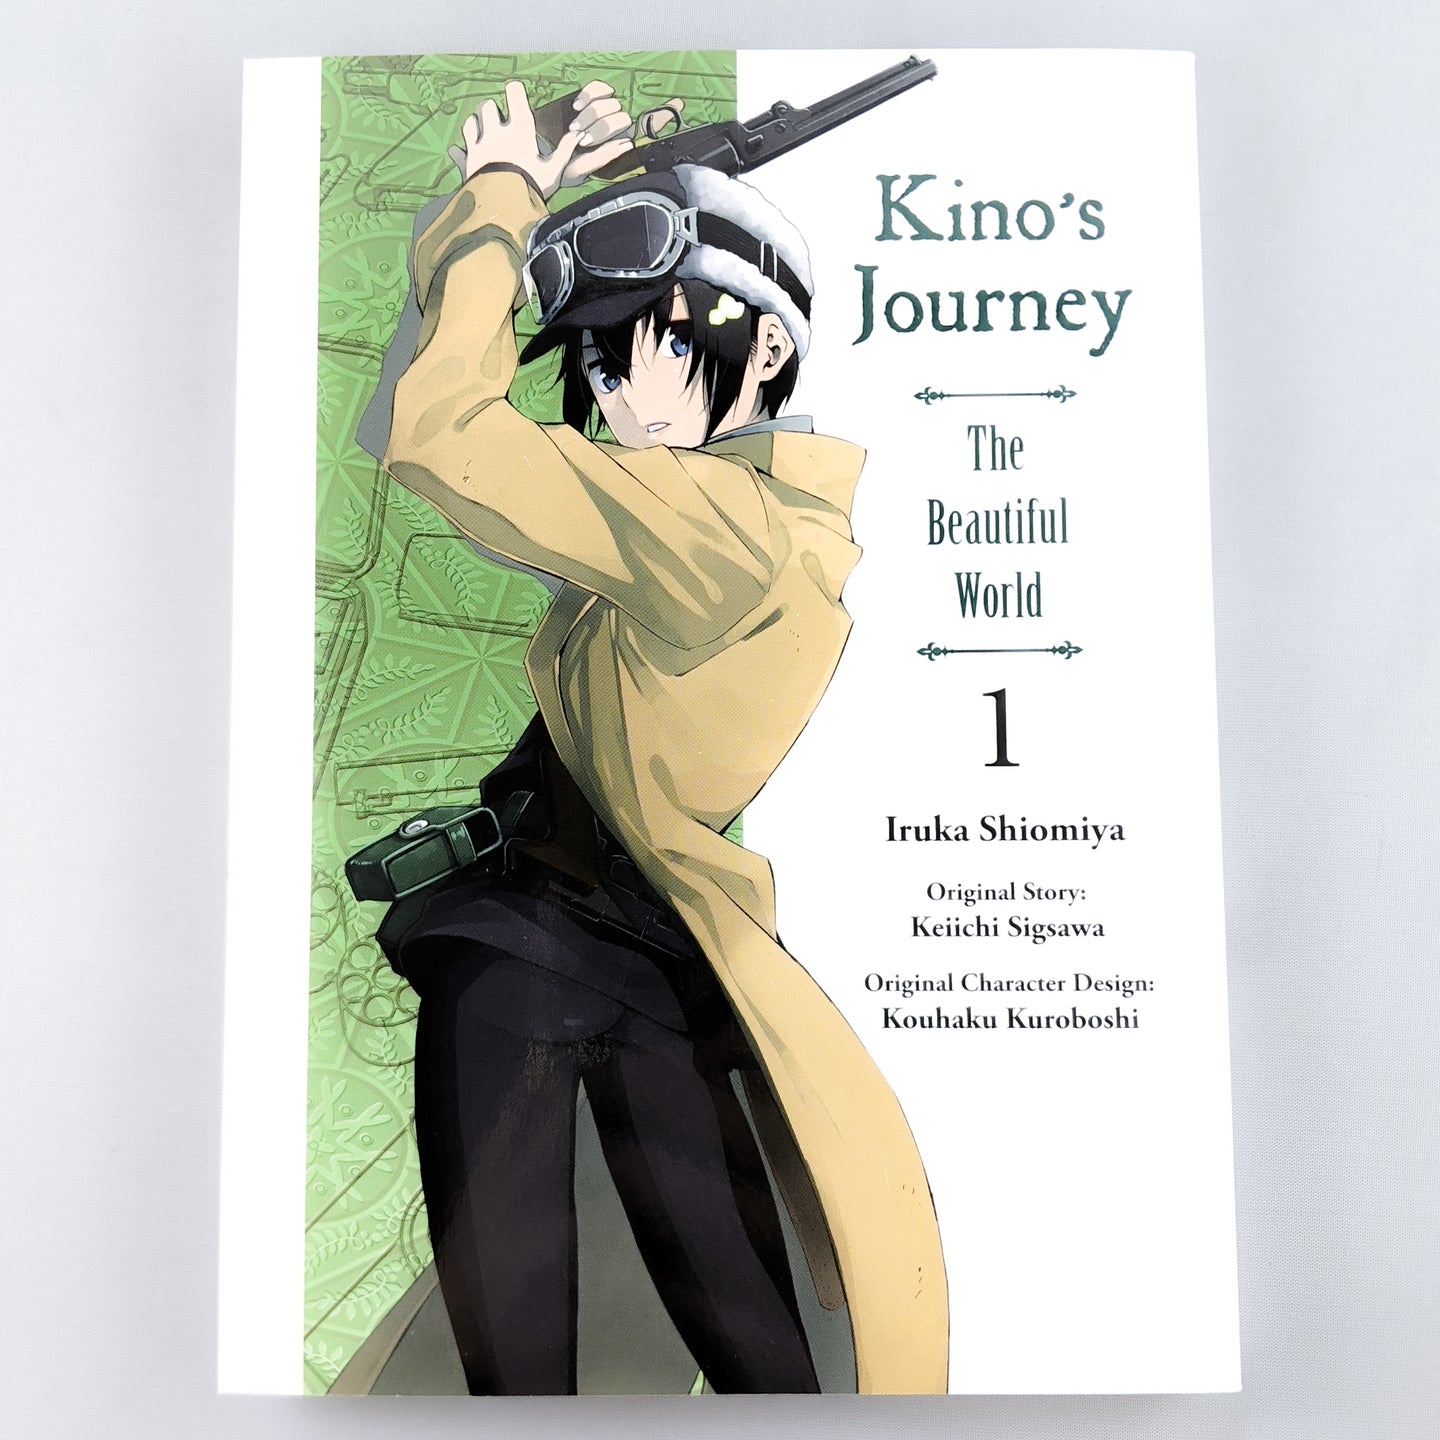 Kino's Journey The Beautiful World Manga volume 1. Manga by Iruka Shiomiya. Original Story by Keiichi Sigsawa. Original Character Design by Kouhaku Kuroboshi.